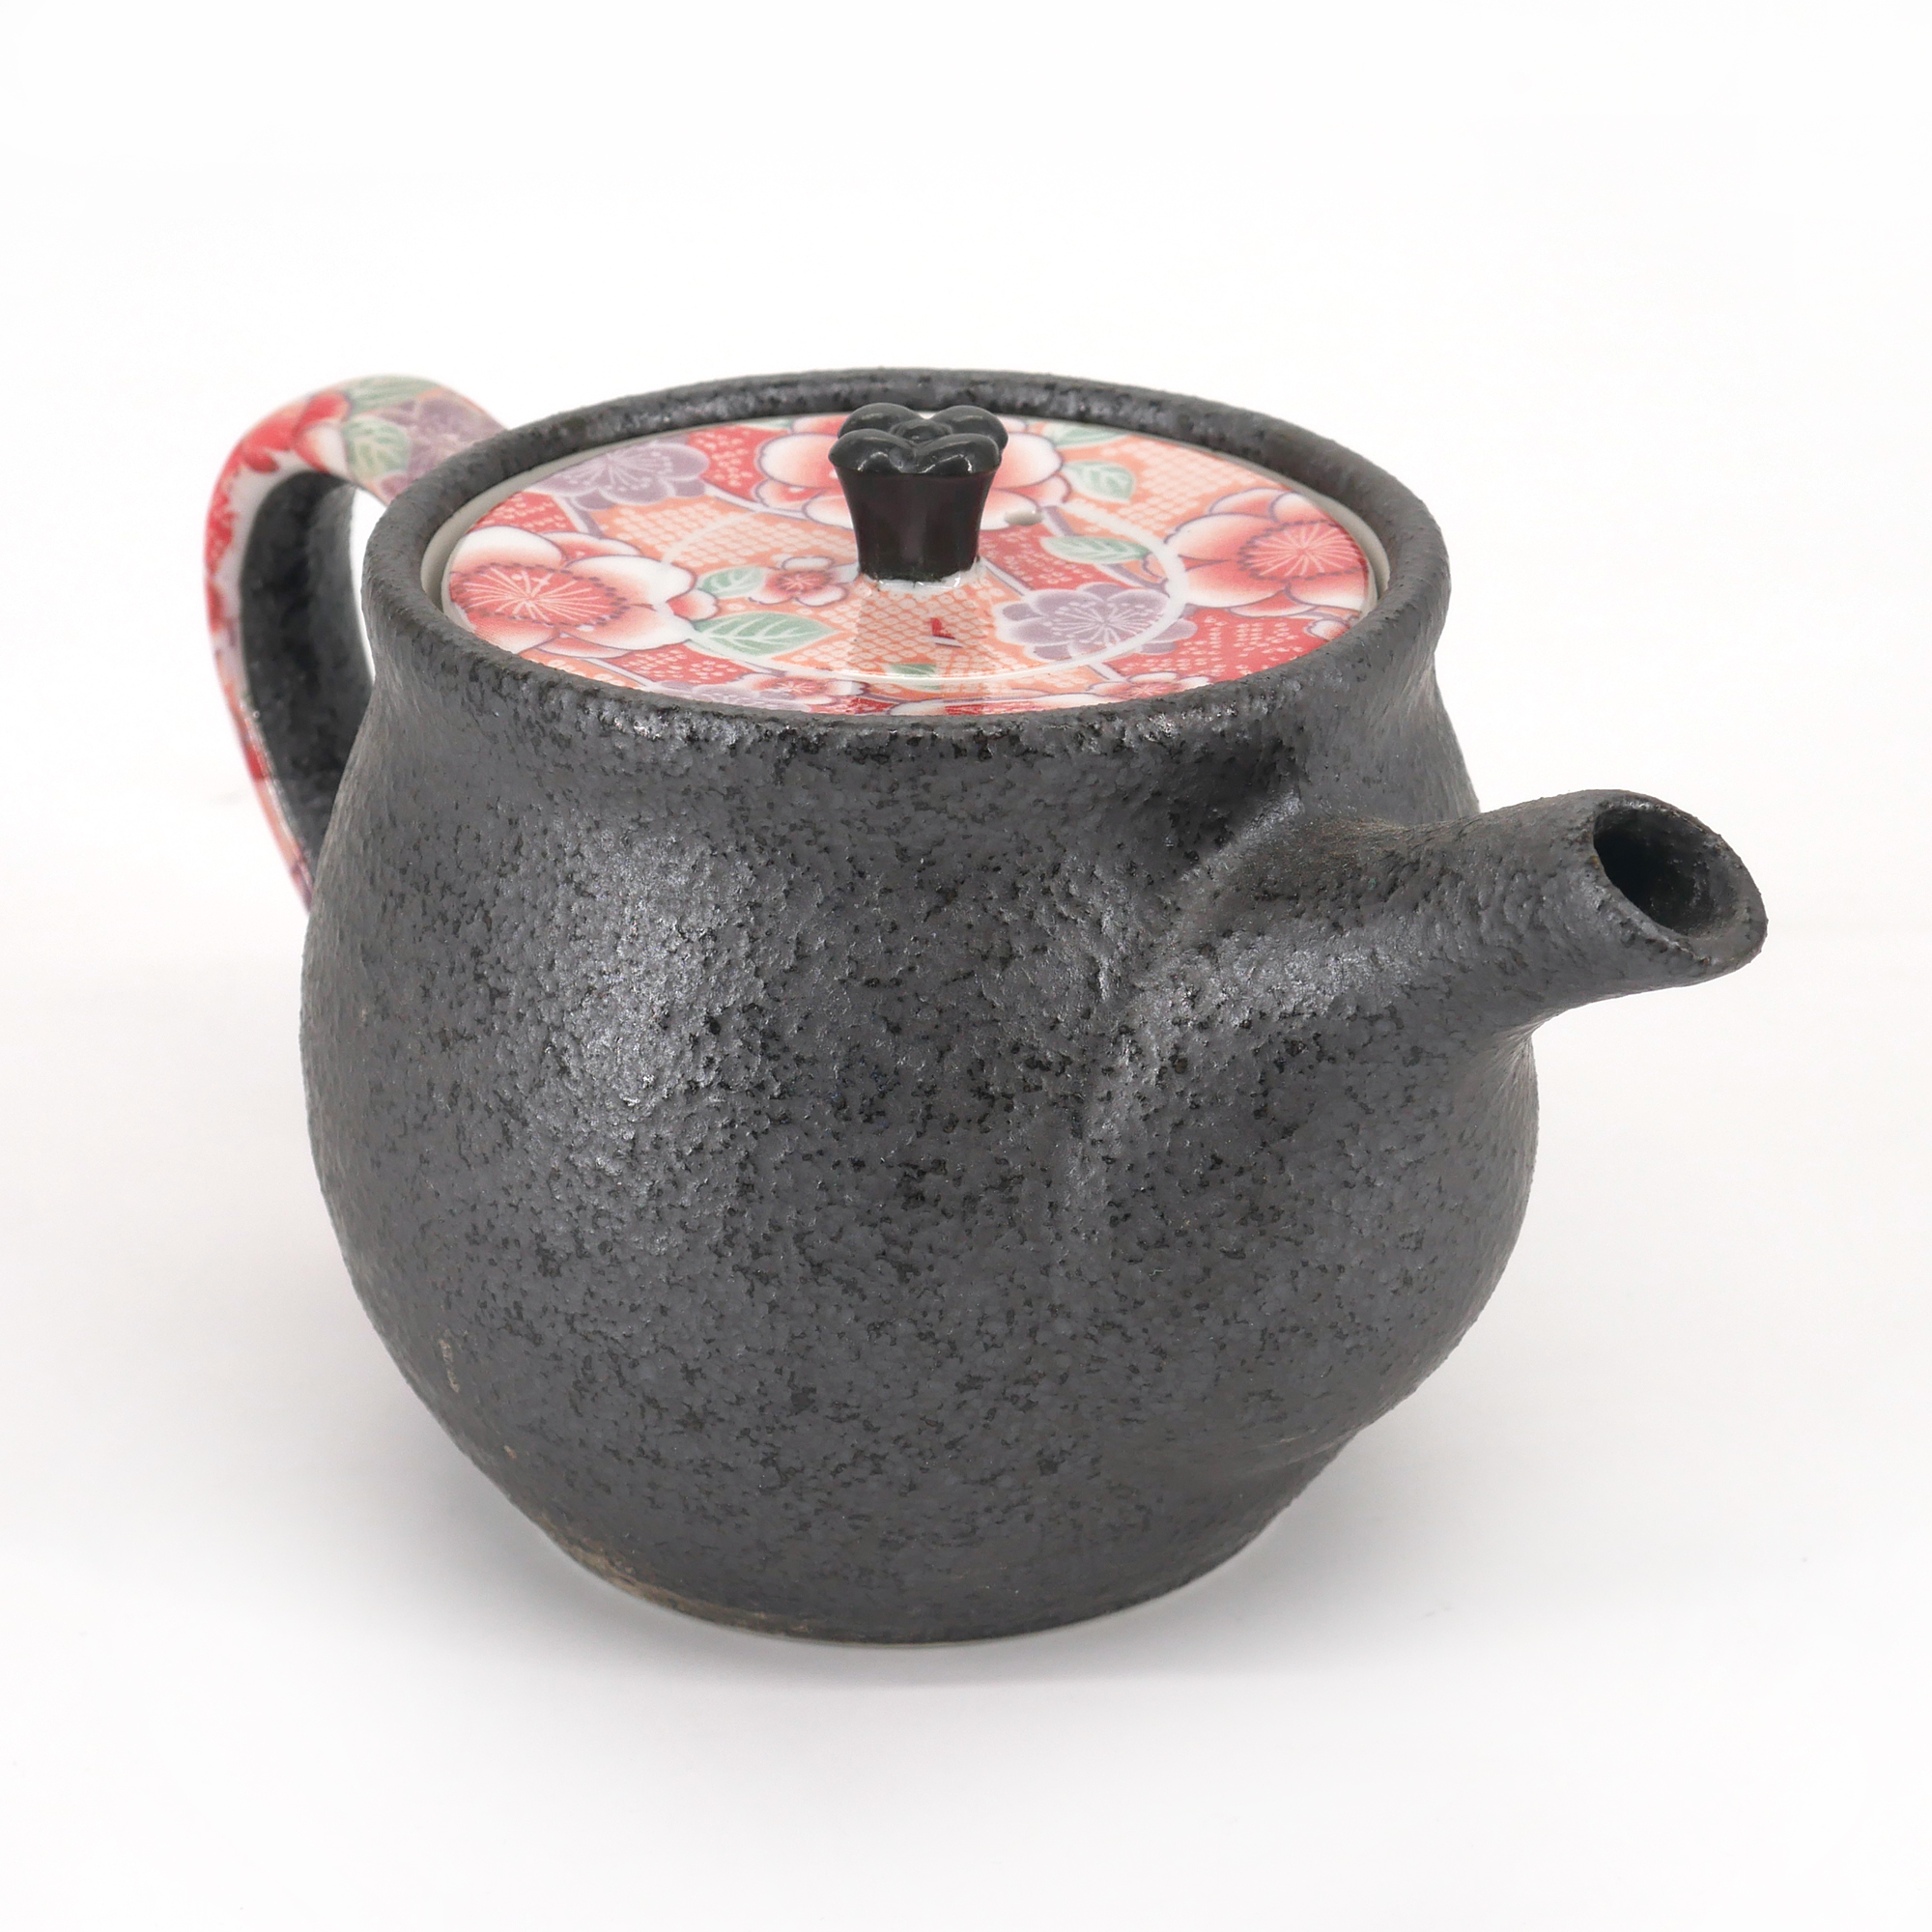 https://ryokucha.fr/58205/japanese-ceramic-teapot-hana-pink-and-gray.jpg